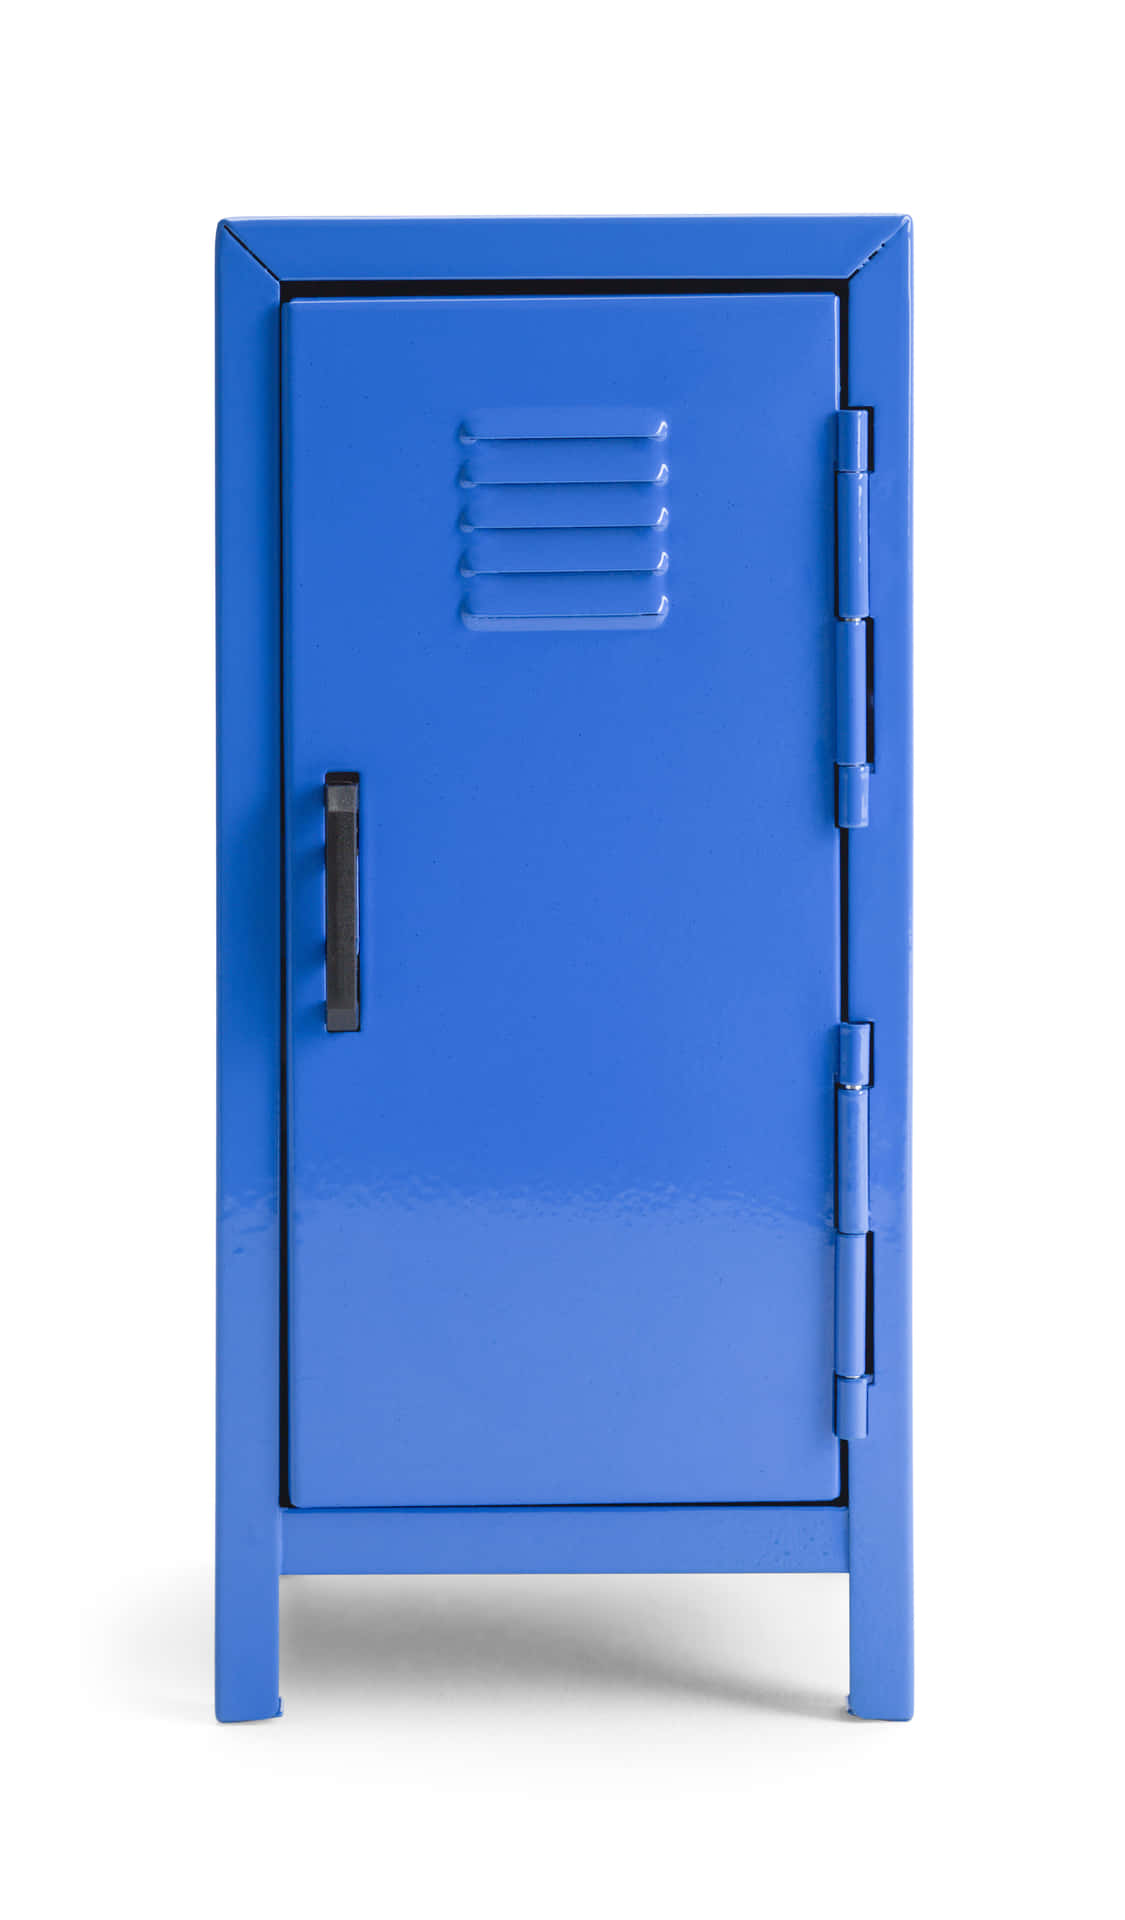 A Blue Metal Locker With A Door